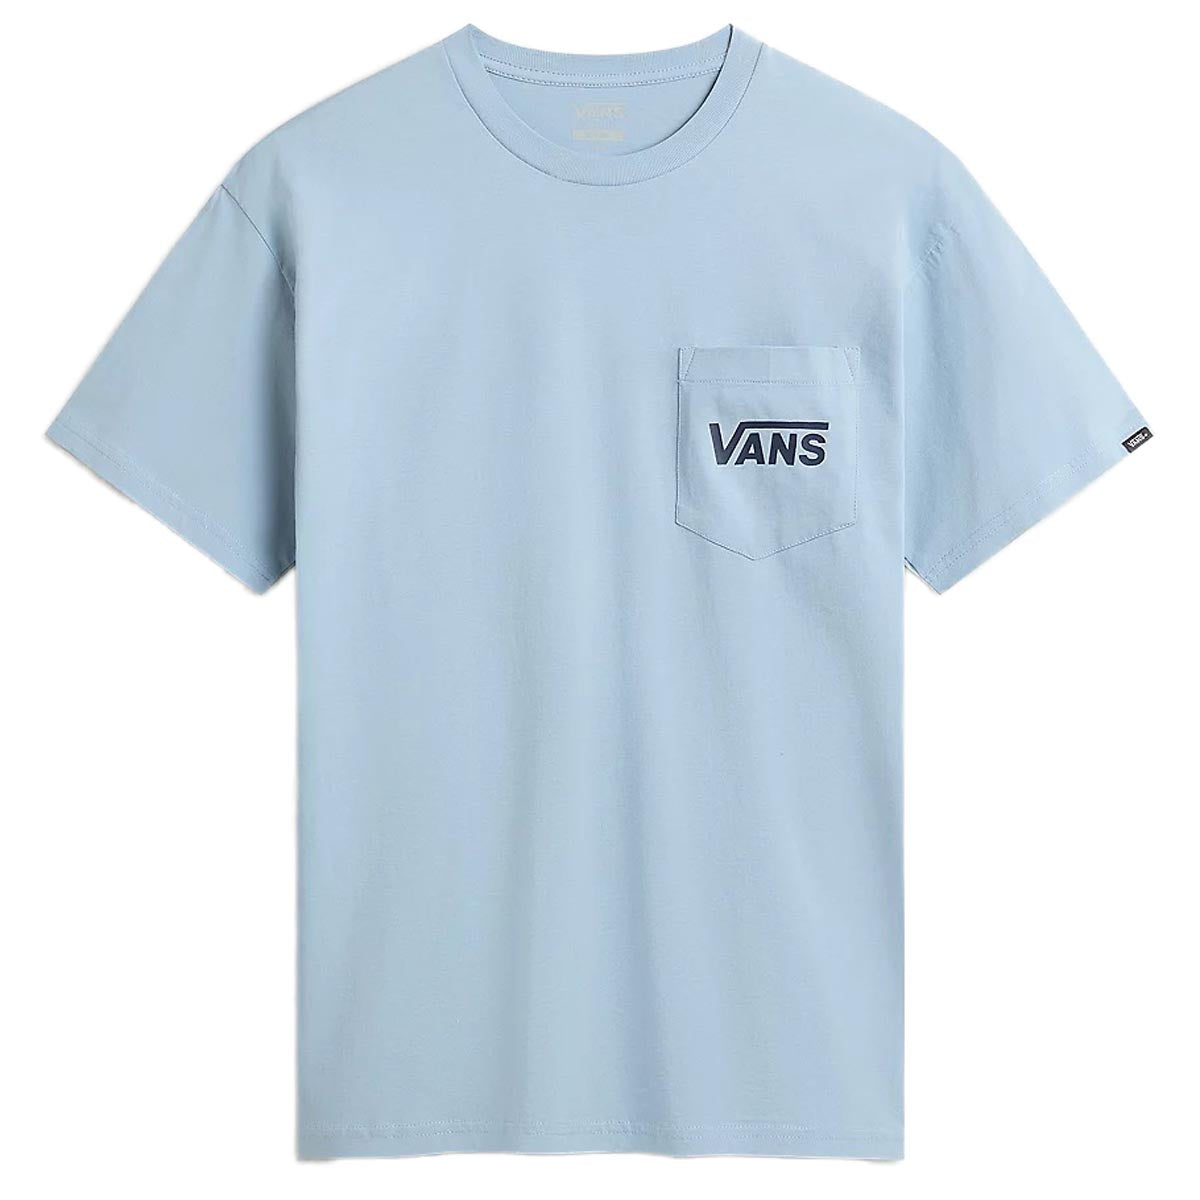 Vans Style 76 Back T-Shirt - Dusty Blue/Dress Blues image 1